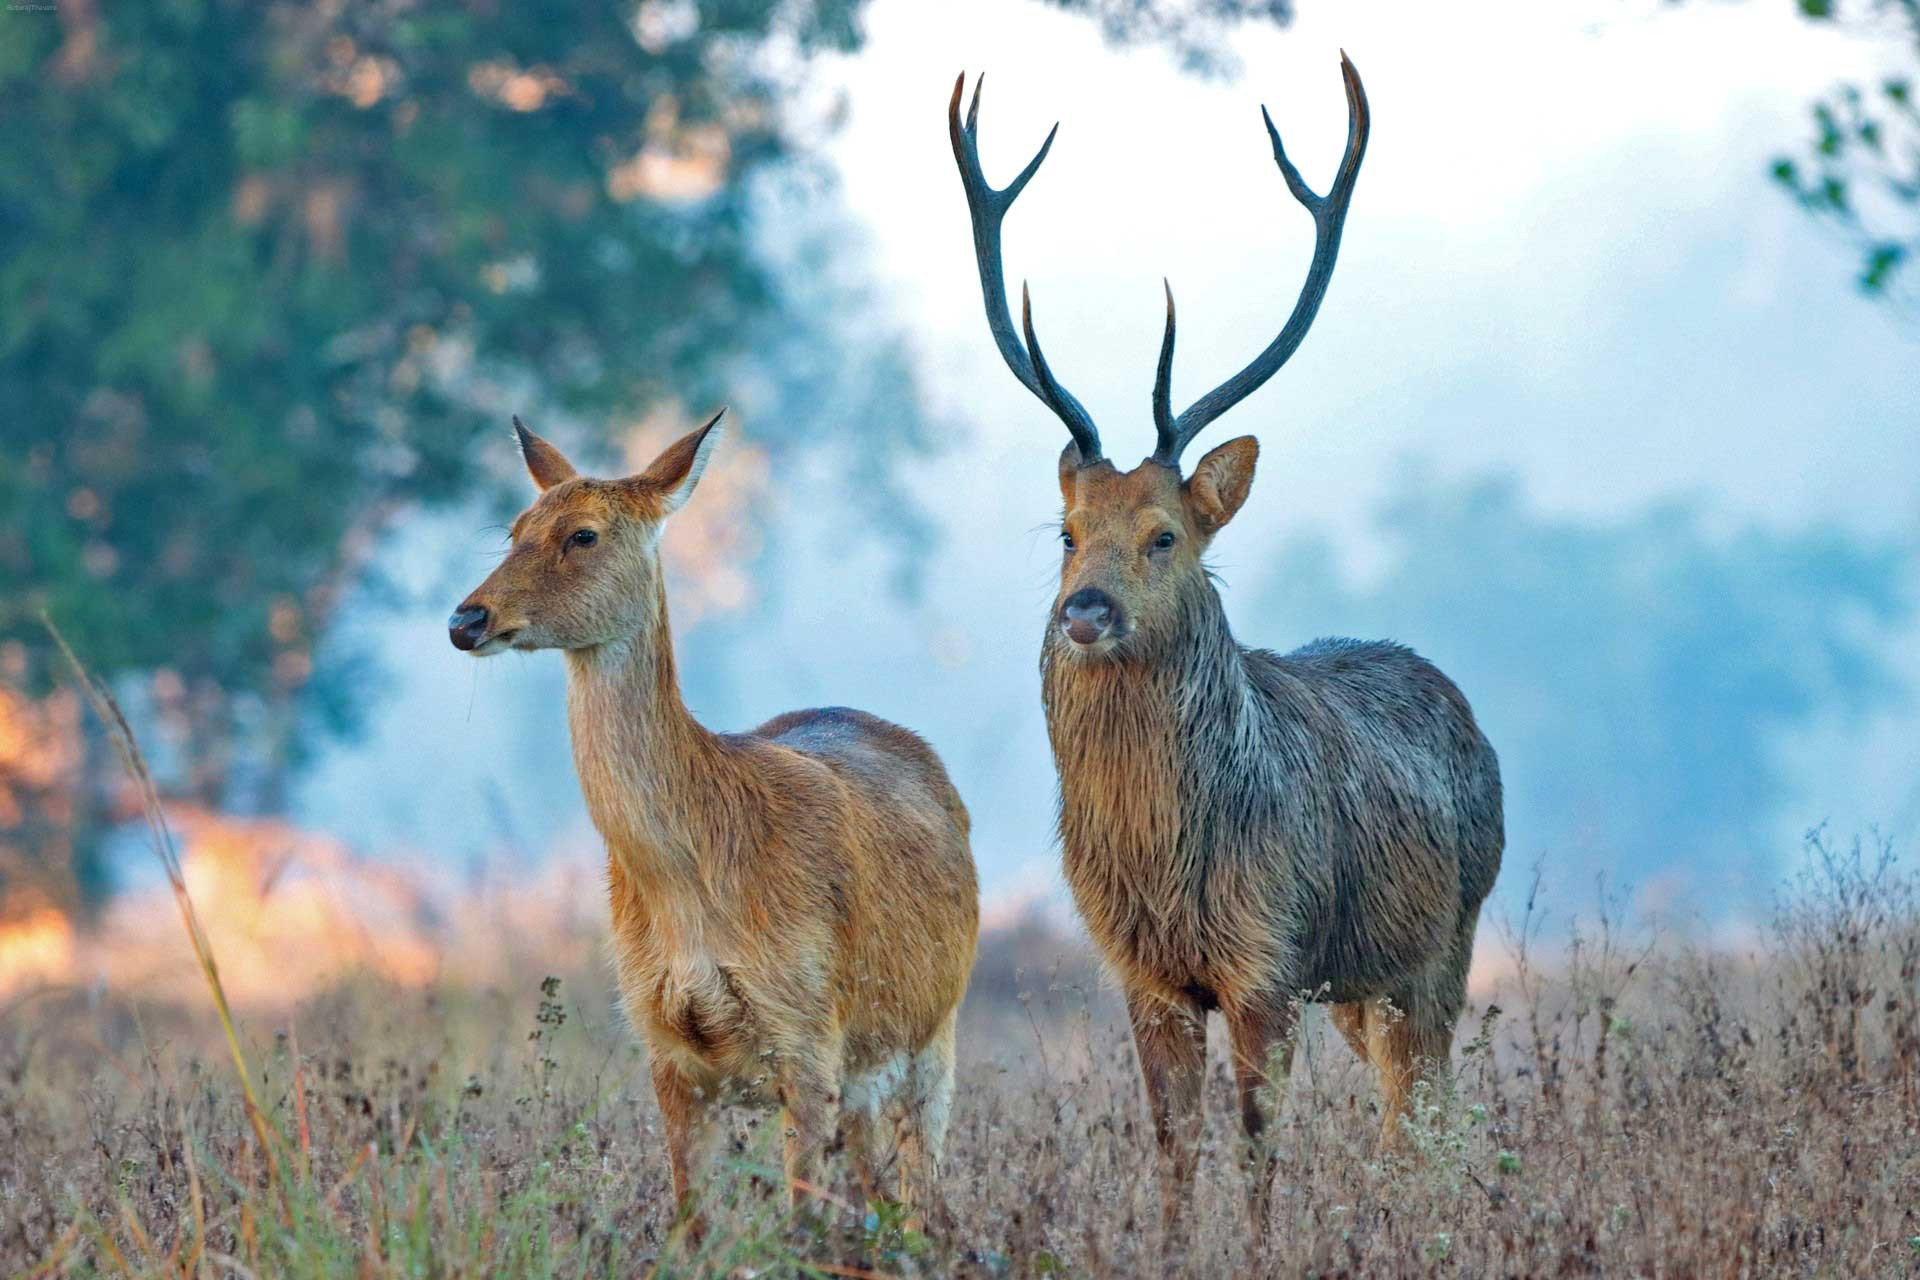 Meet The State Animals Of India | Nature inFocus